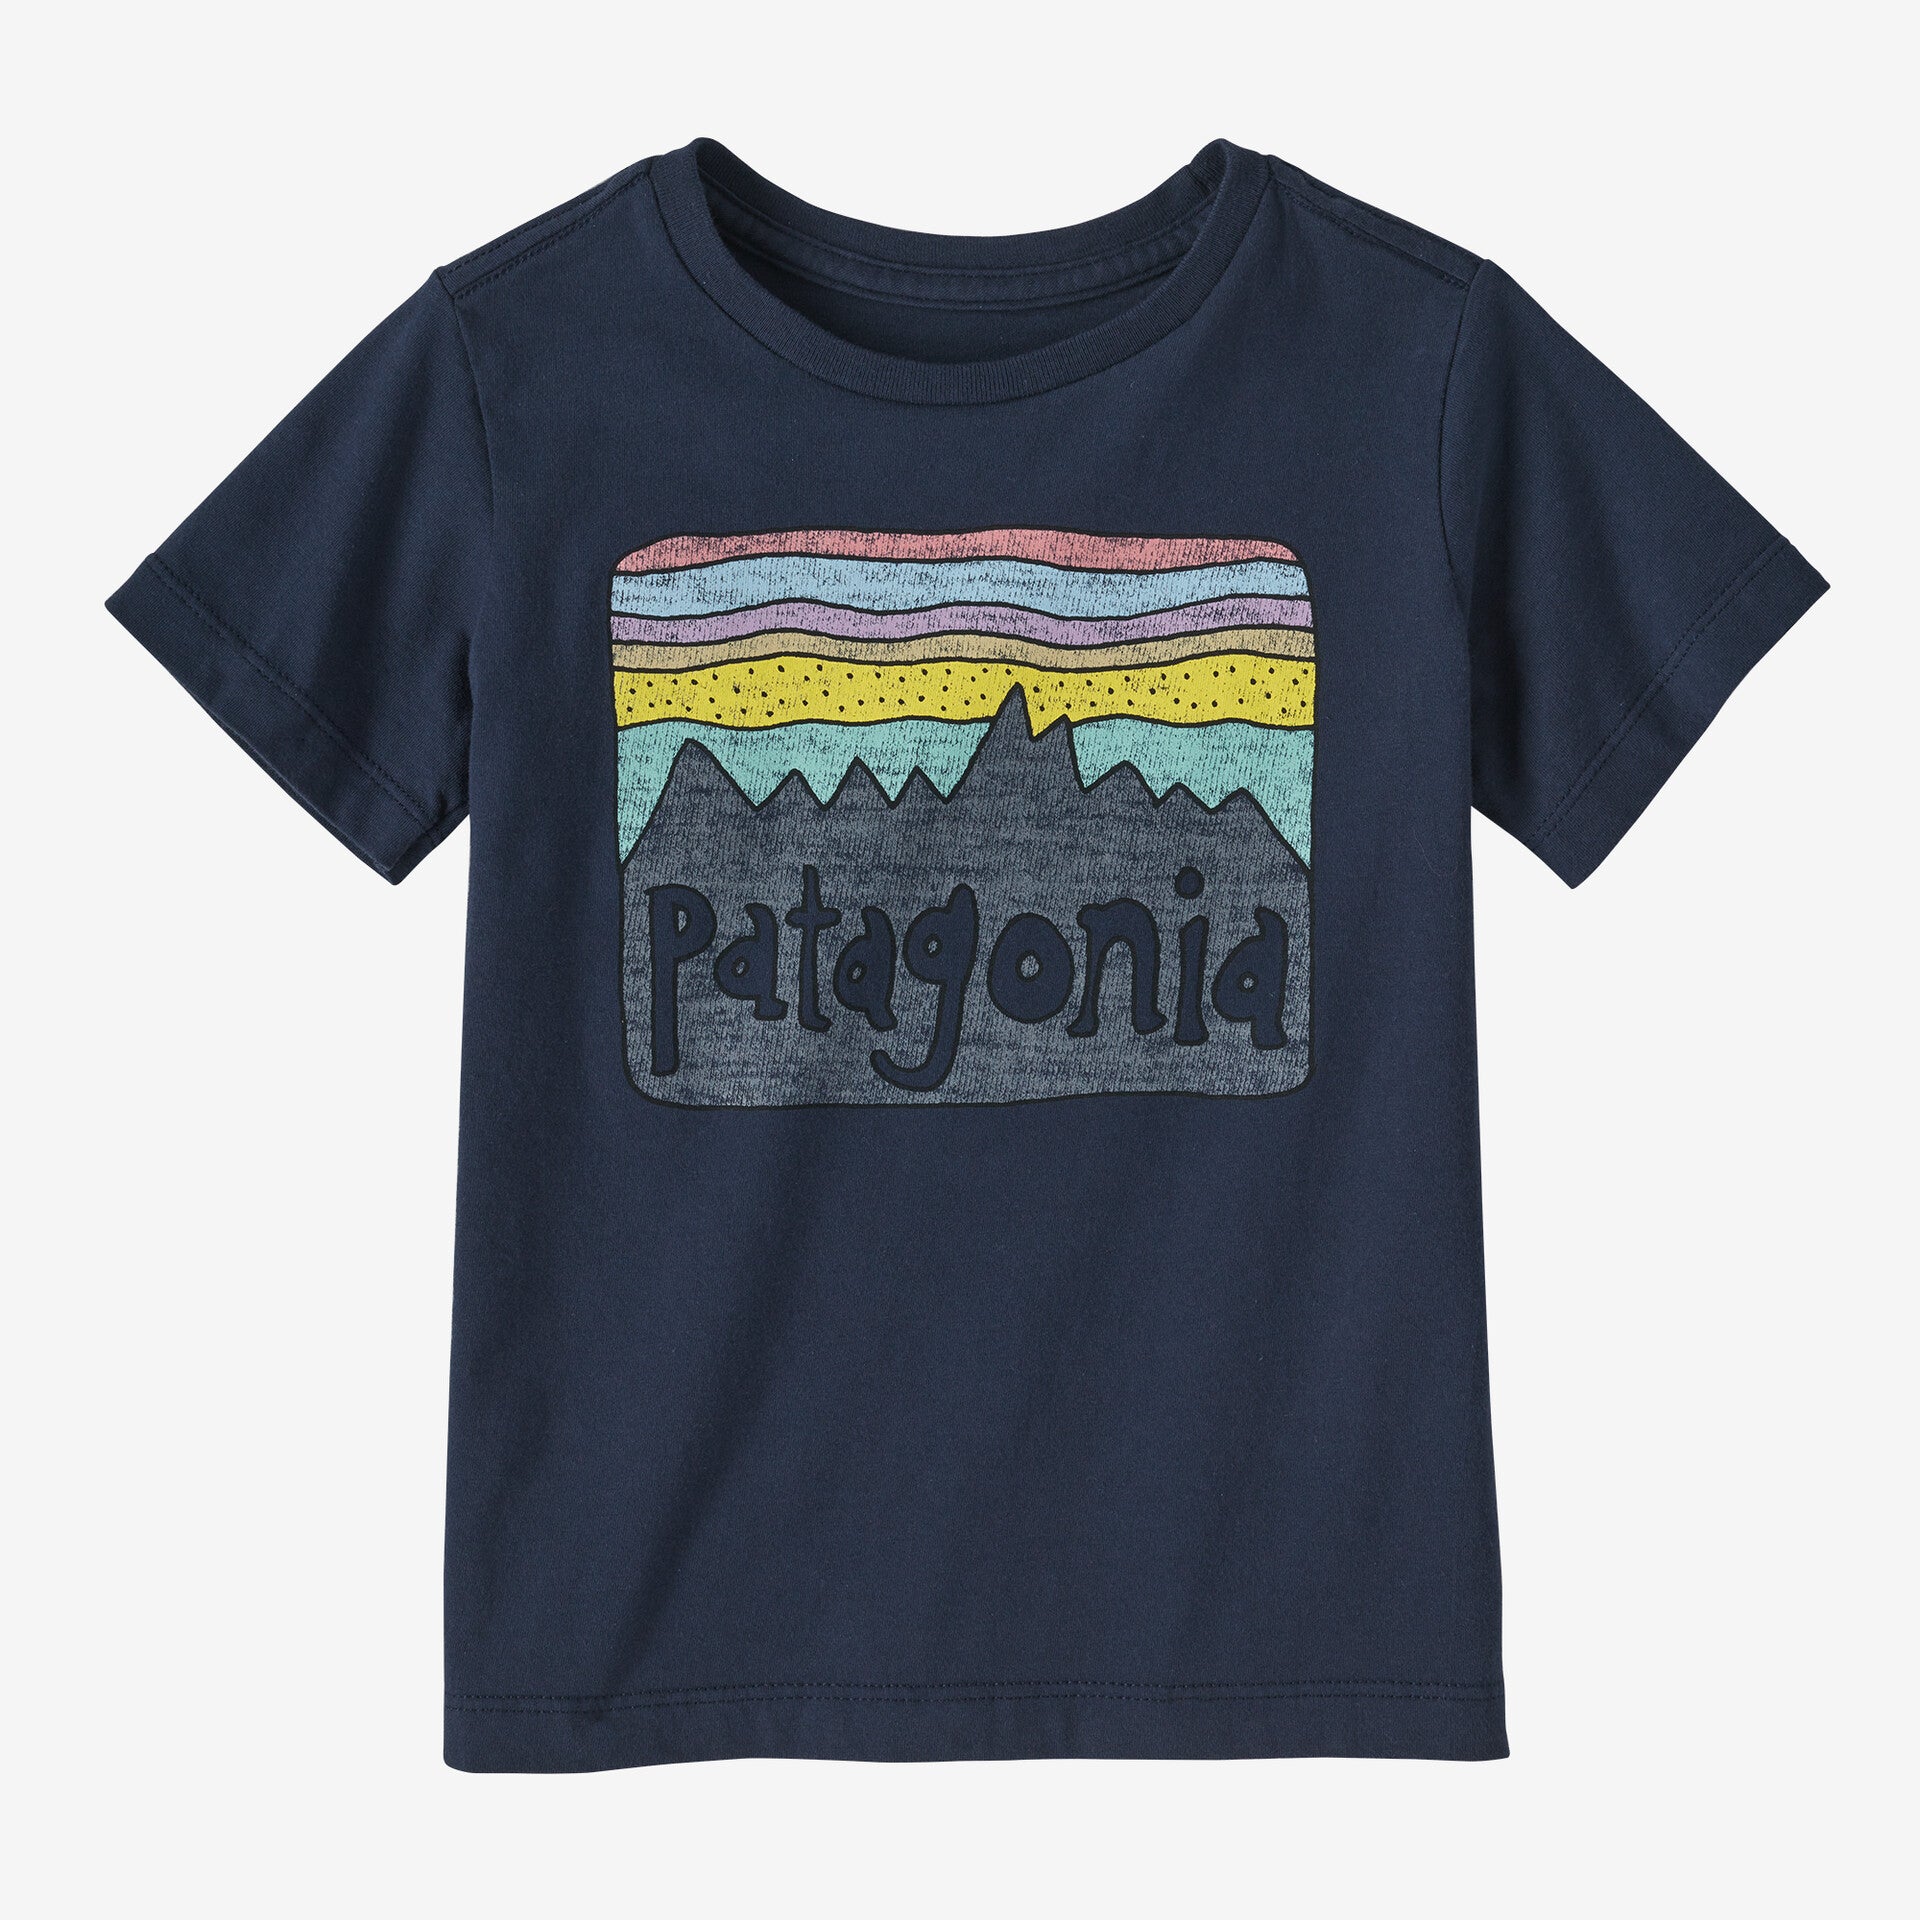 Patagonia B Fitz Roy Skies T-Shirt - New Navy